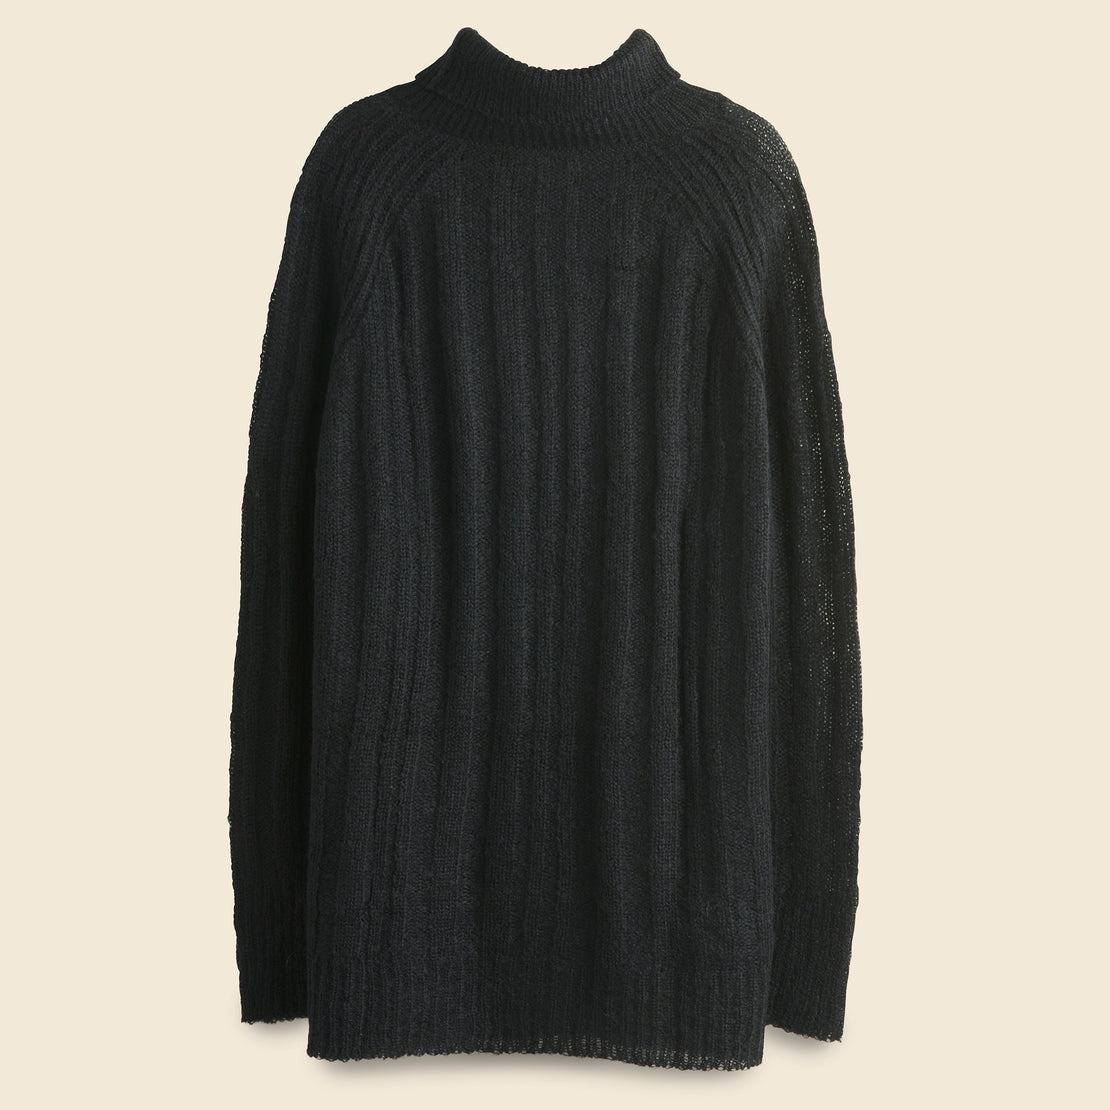 Vera Sweater - Black - Atelier Delphine - STAG Provisions - W - Tops - Sweater